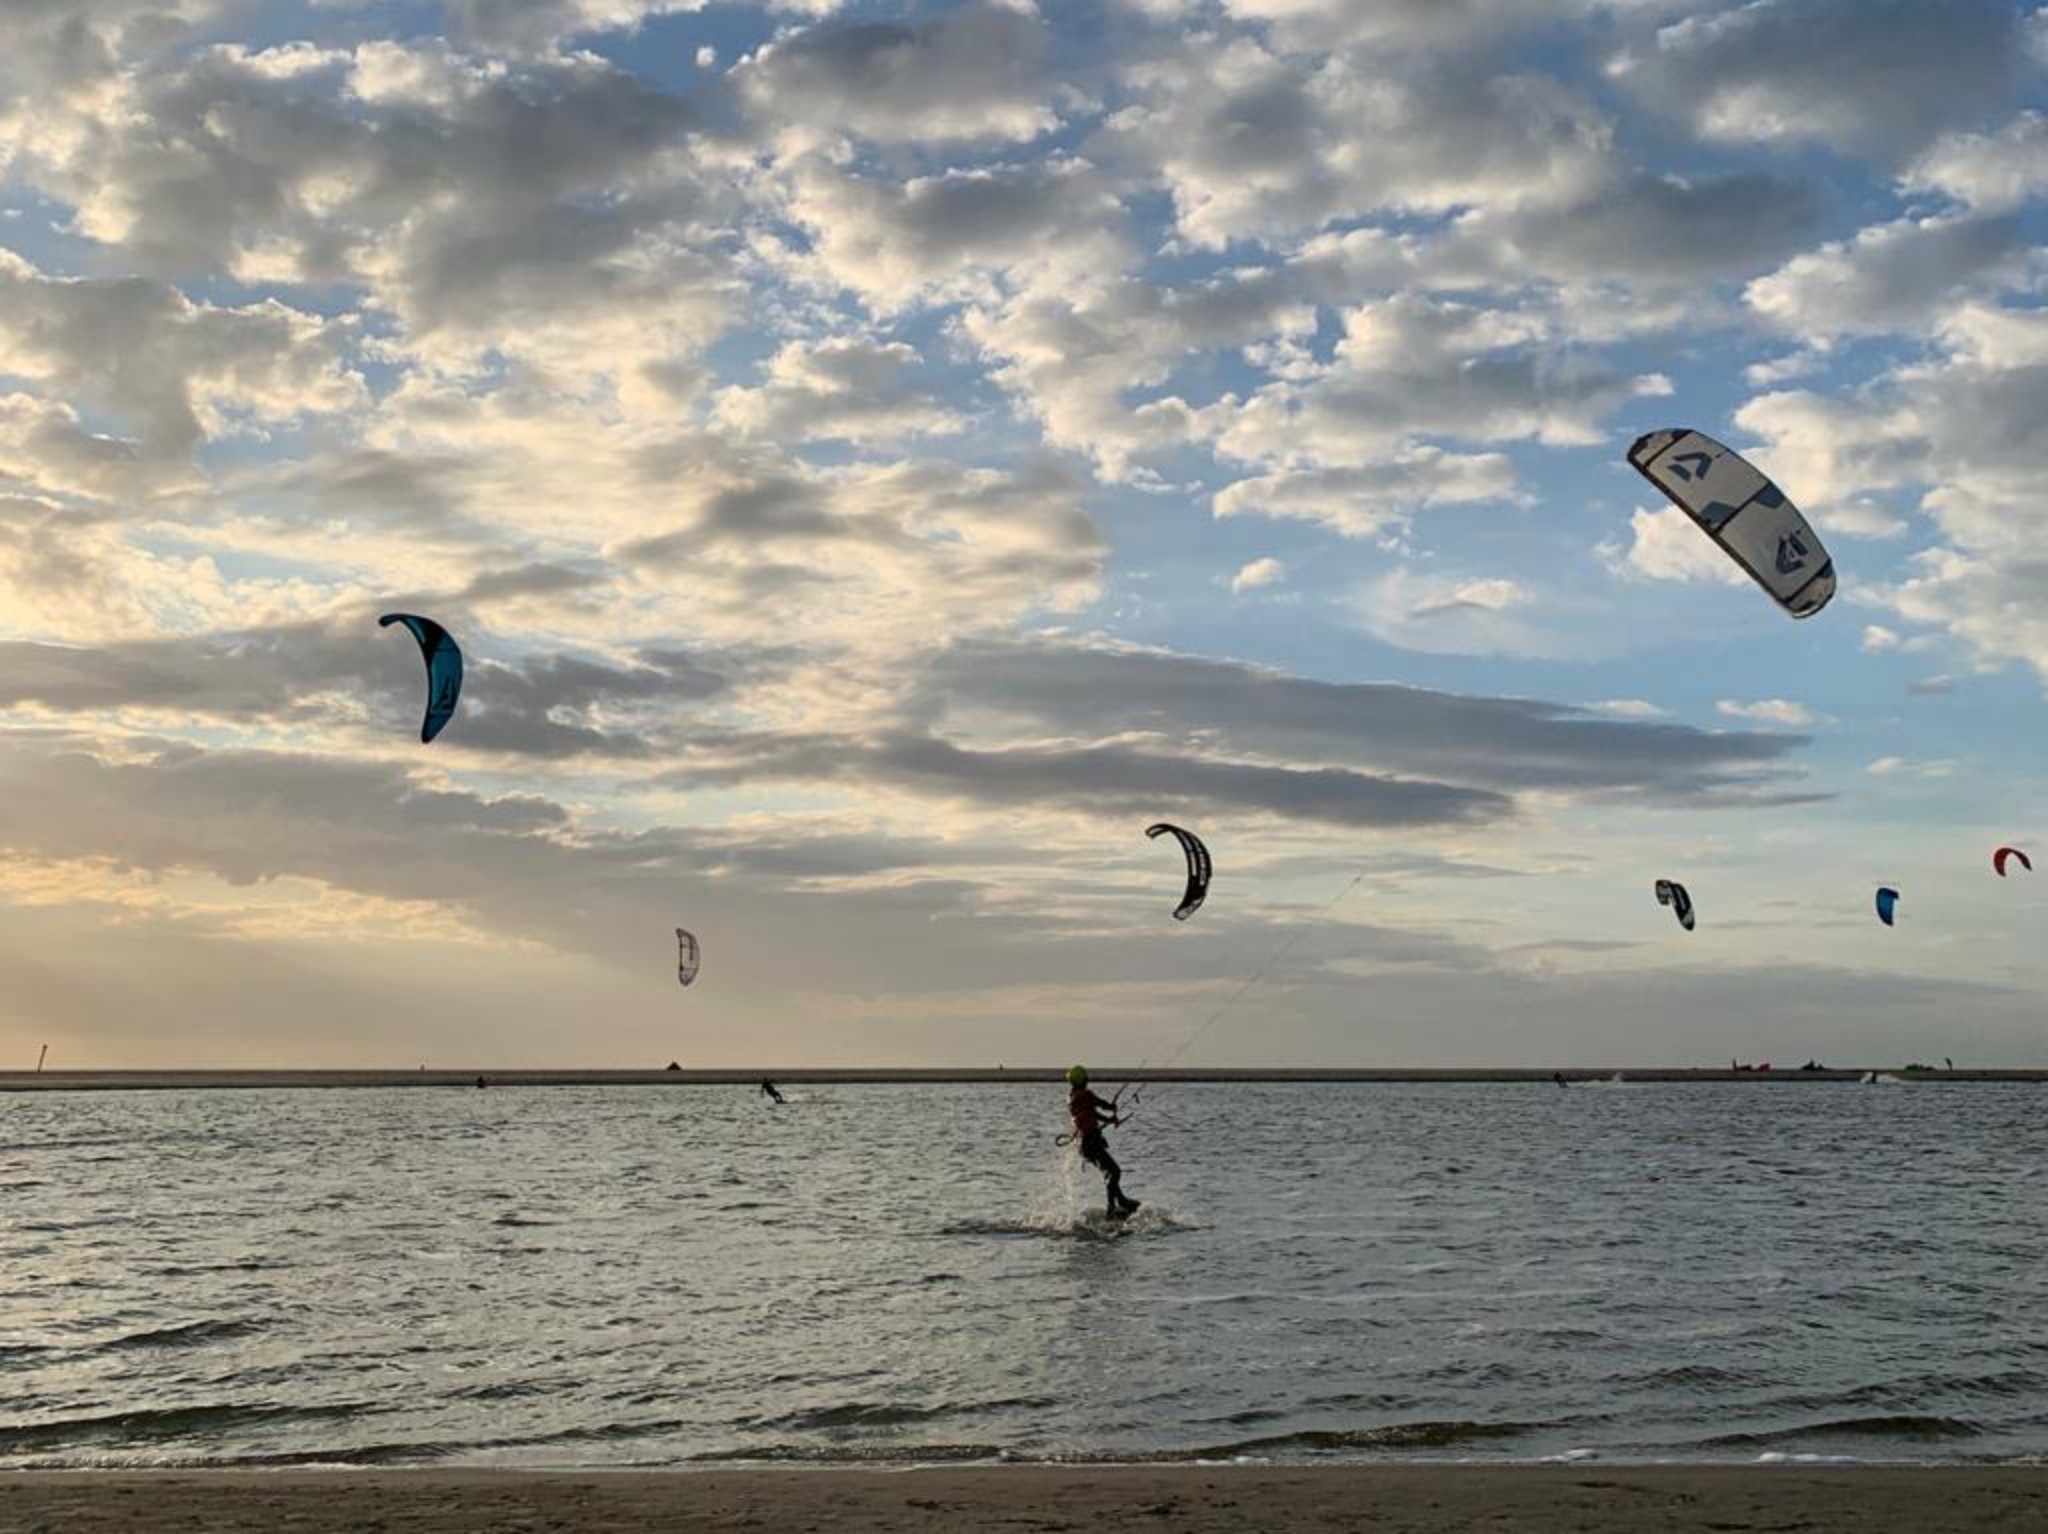 Kitesurfing in Kijkduin - Den Haag